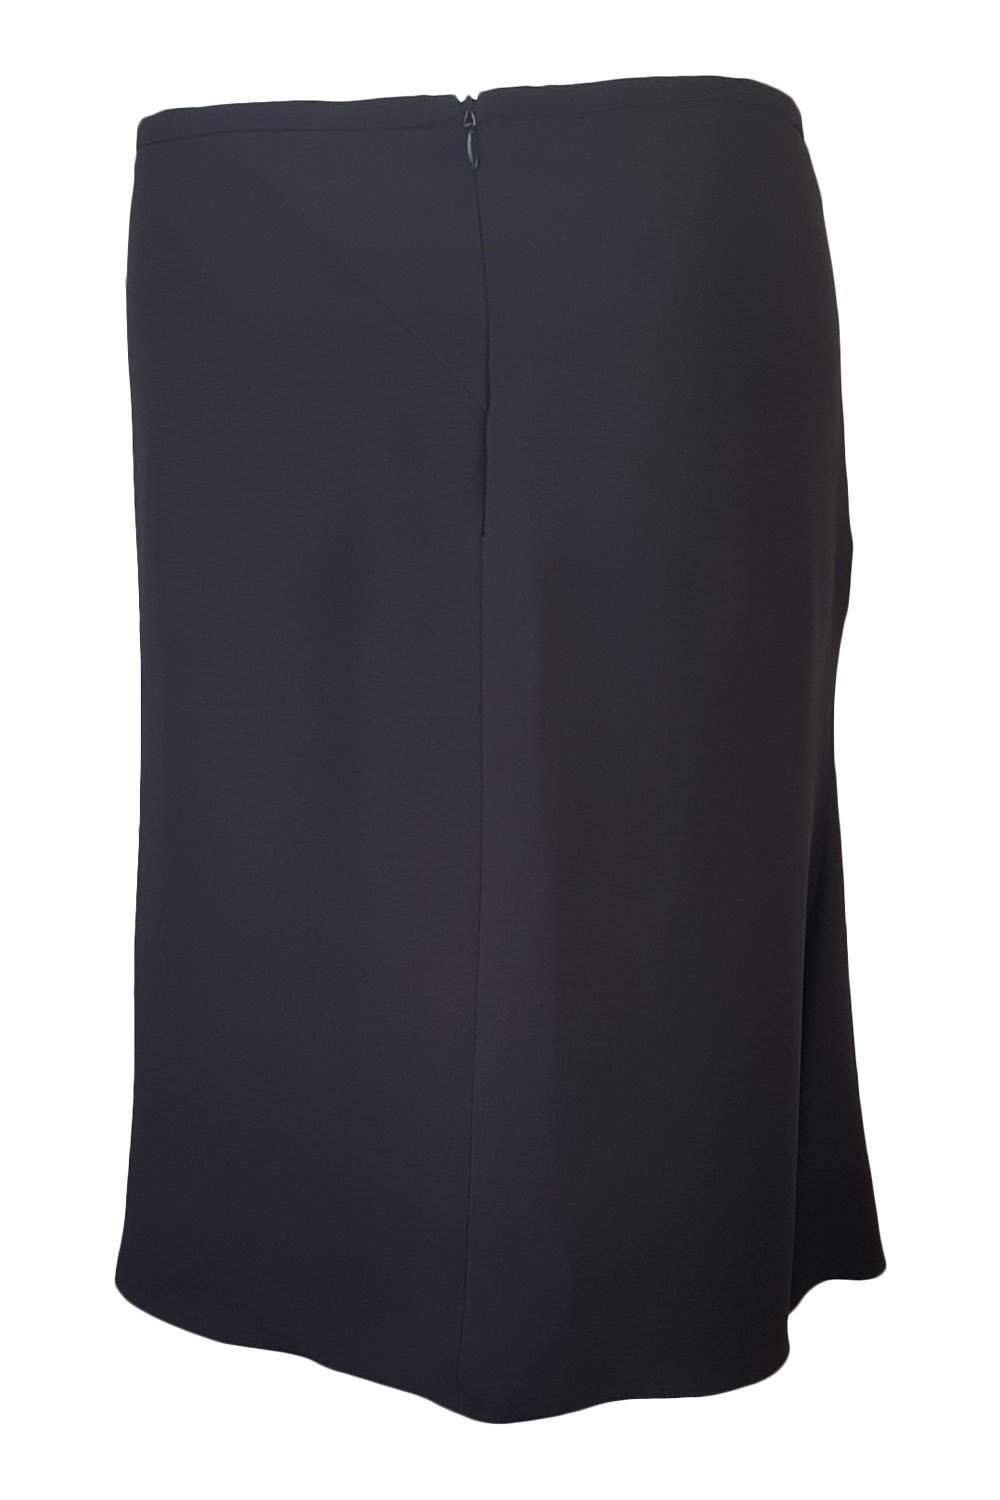 ARMANI Asymmetric Stitch Black Pencil Skirt (40)-Armani-The Freperie